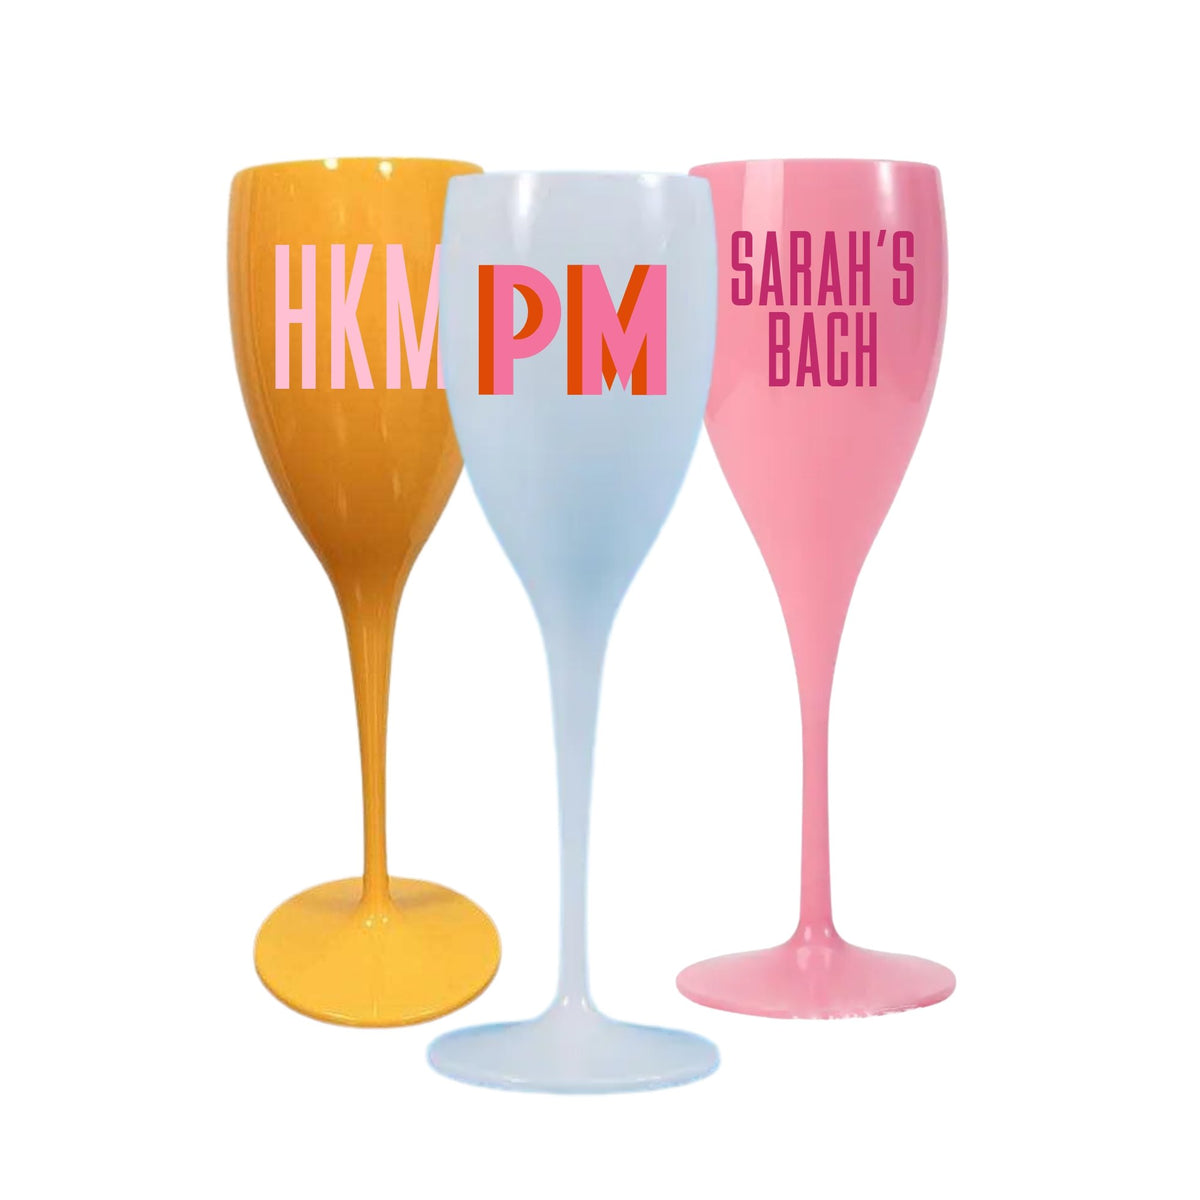 Pink Champagne Flutes | Fancy Glasses